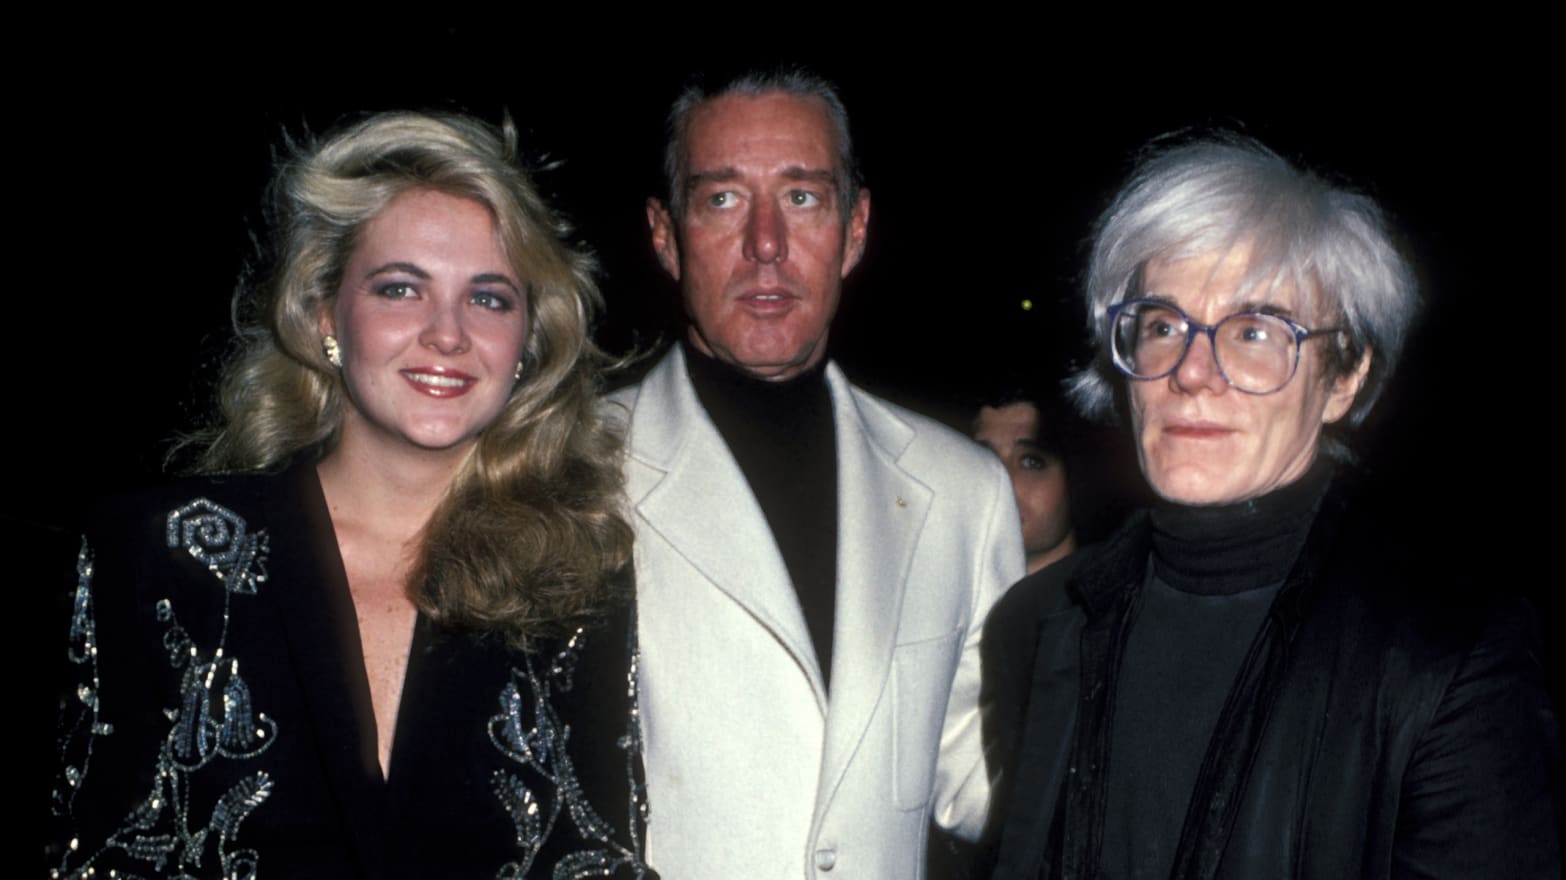 When Fashion Met Art: Andy Warhol & Halston's Decades-Long Friendship